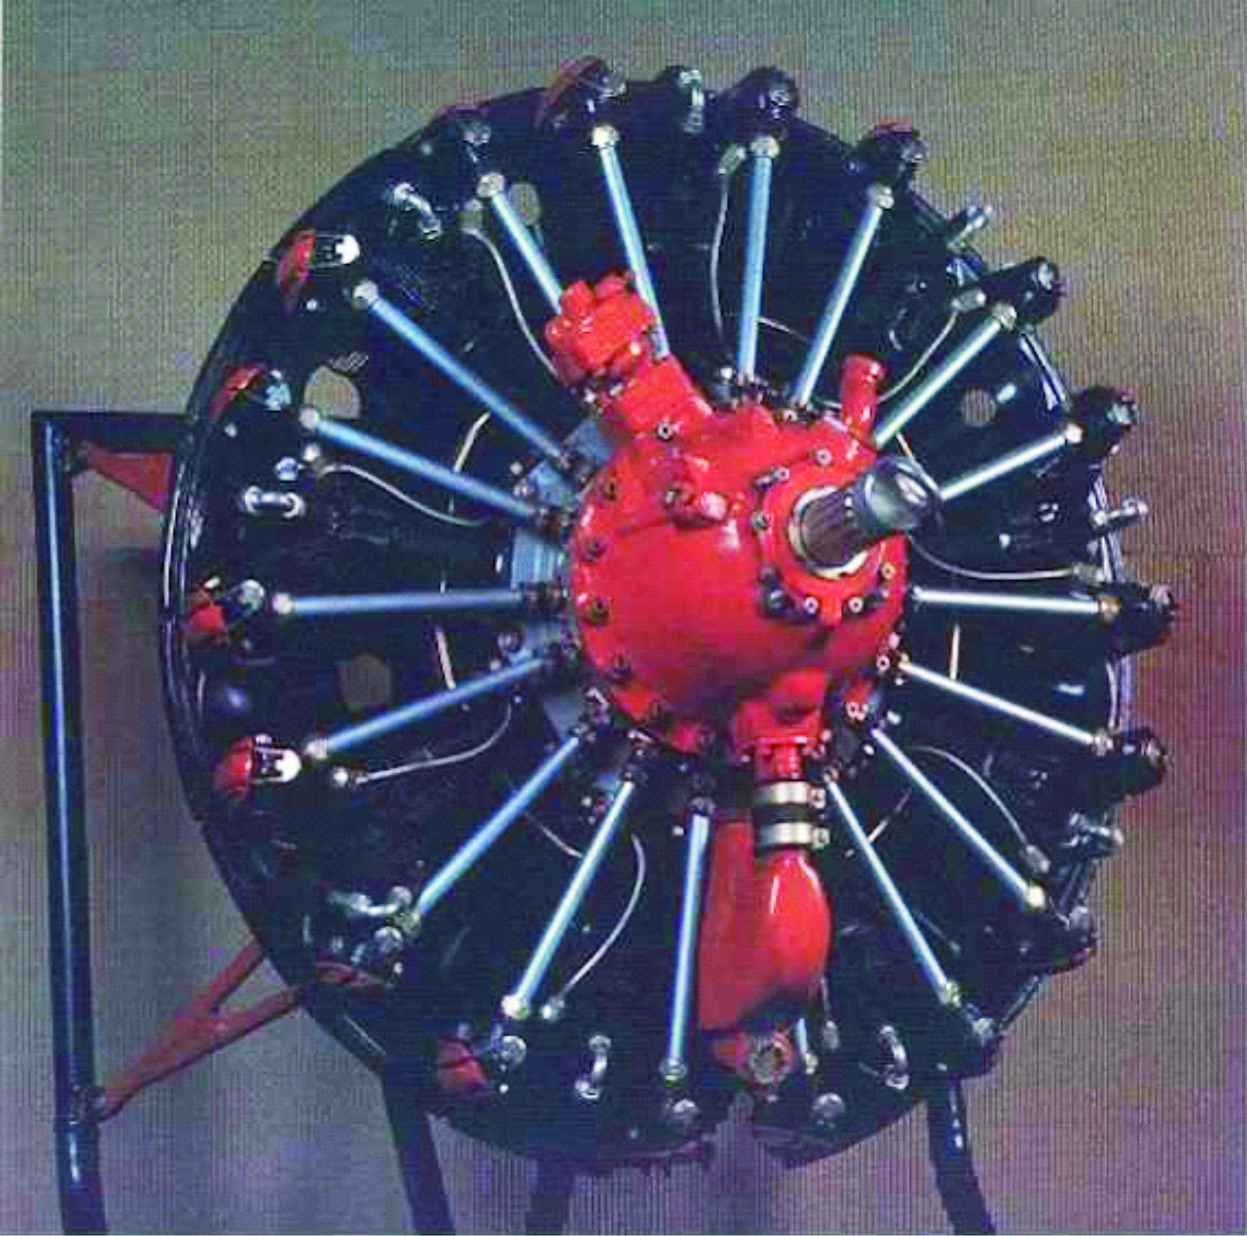 Emission tests of the AI-14RA aircraft engine.